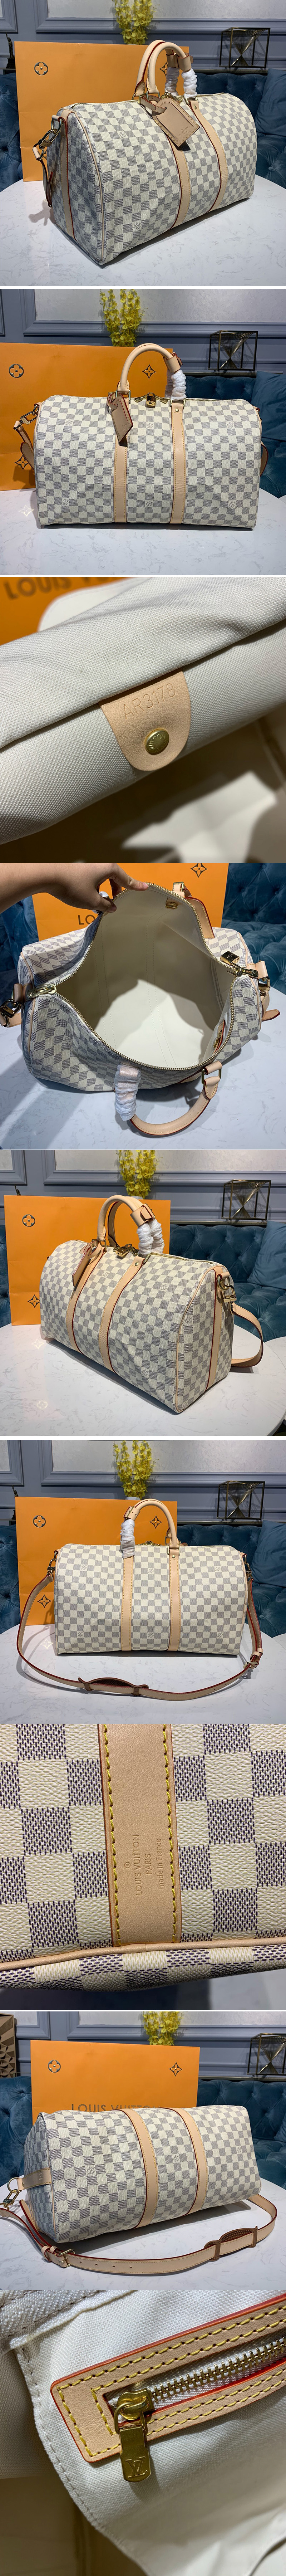 Replica Louis Vuitton N48223 LV Keepall Bandouliere 45 Bag in Damier Azur Canvas